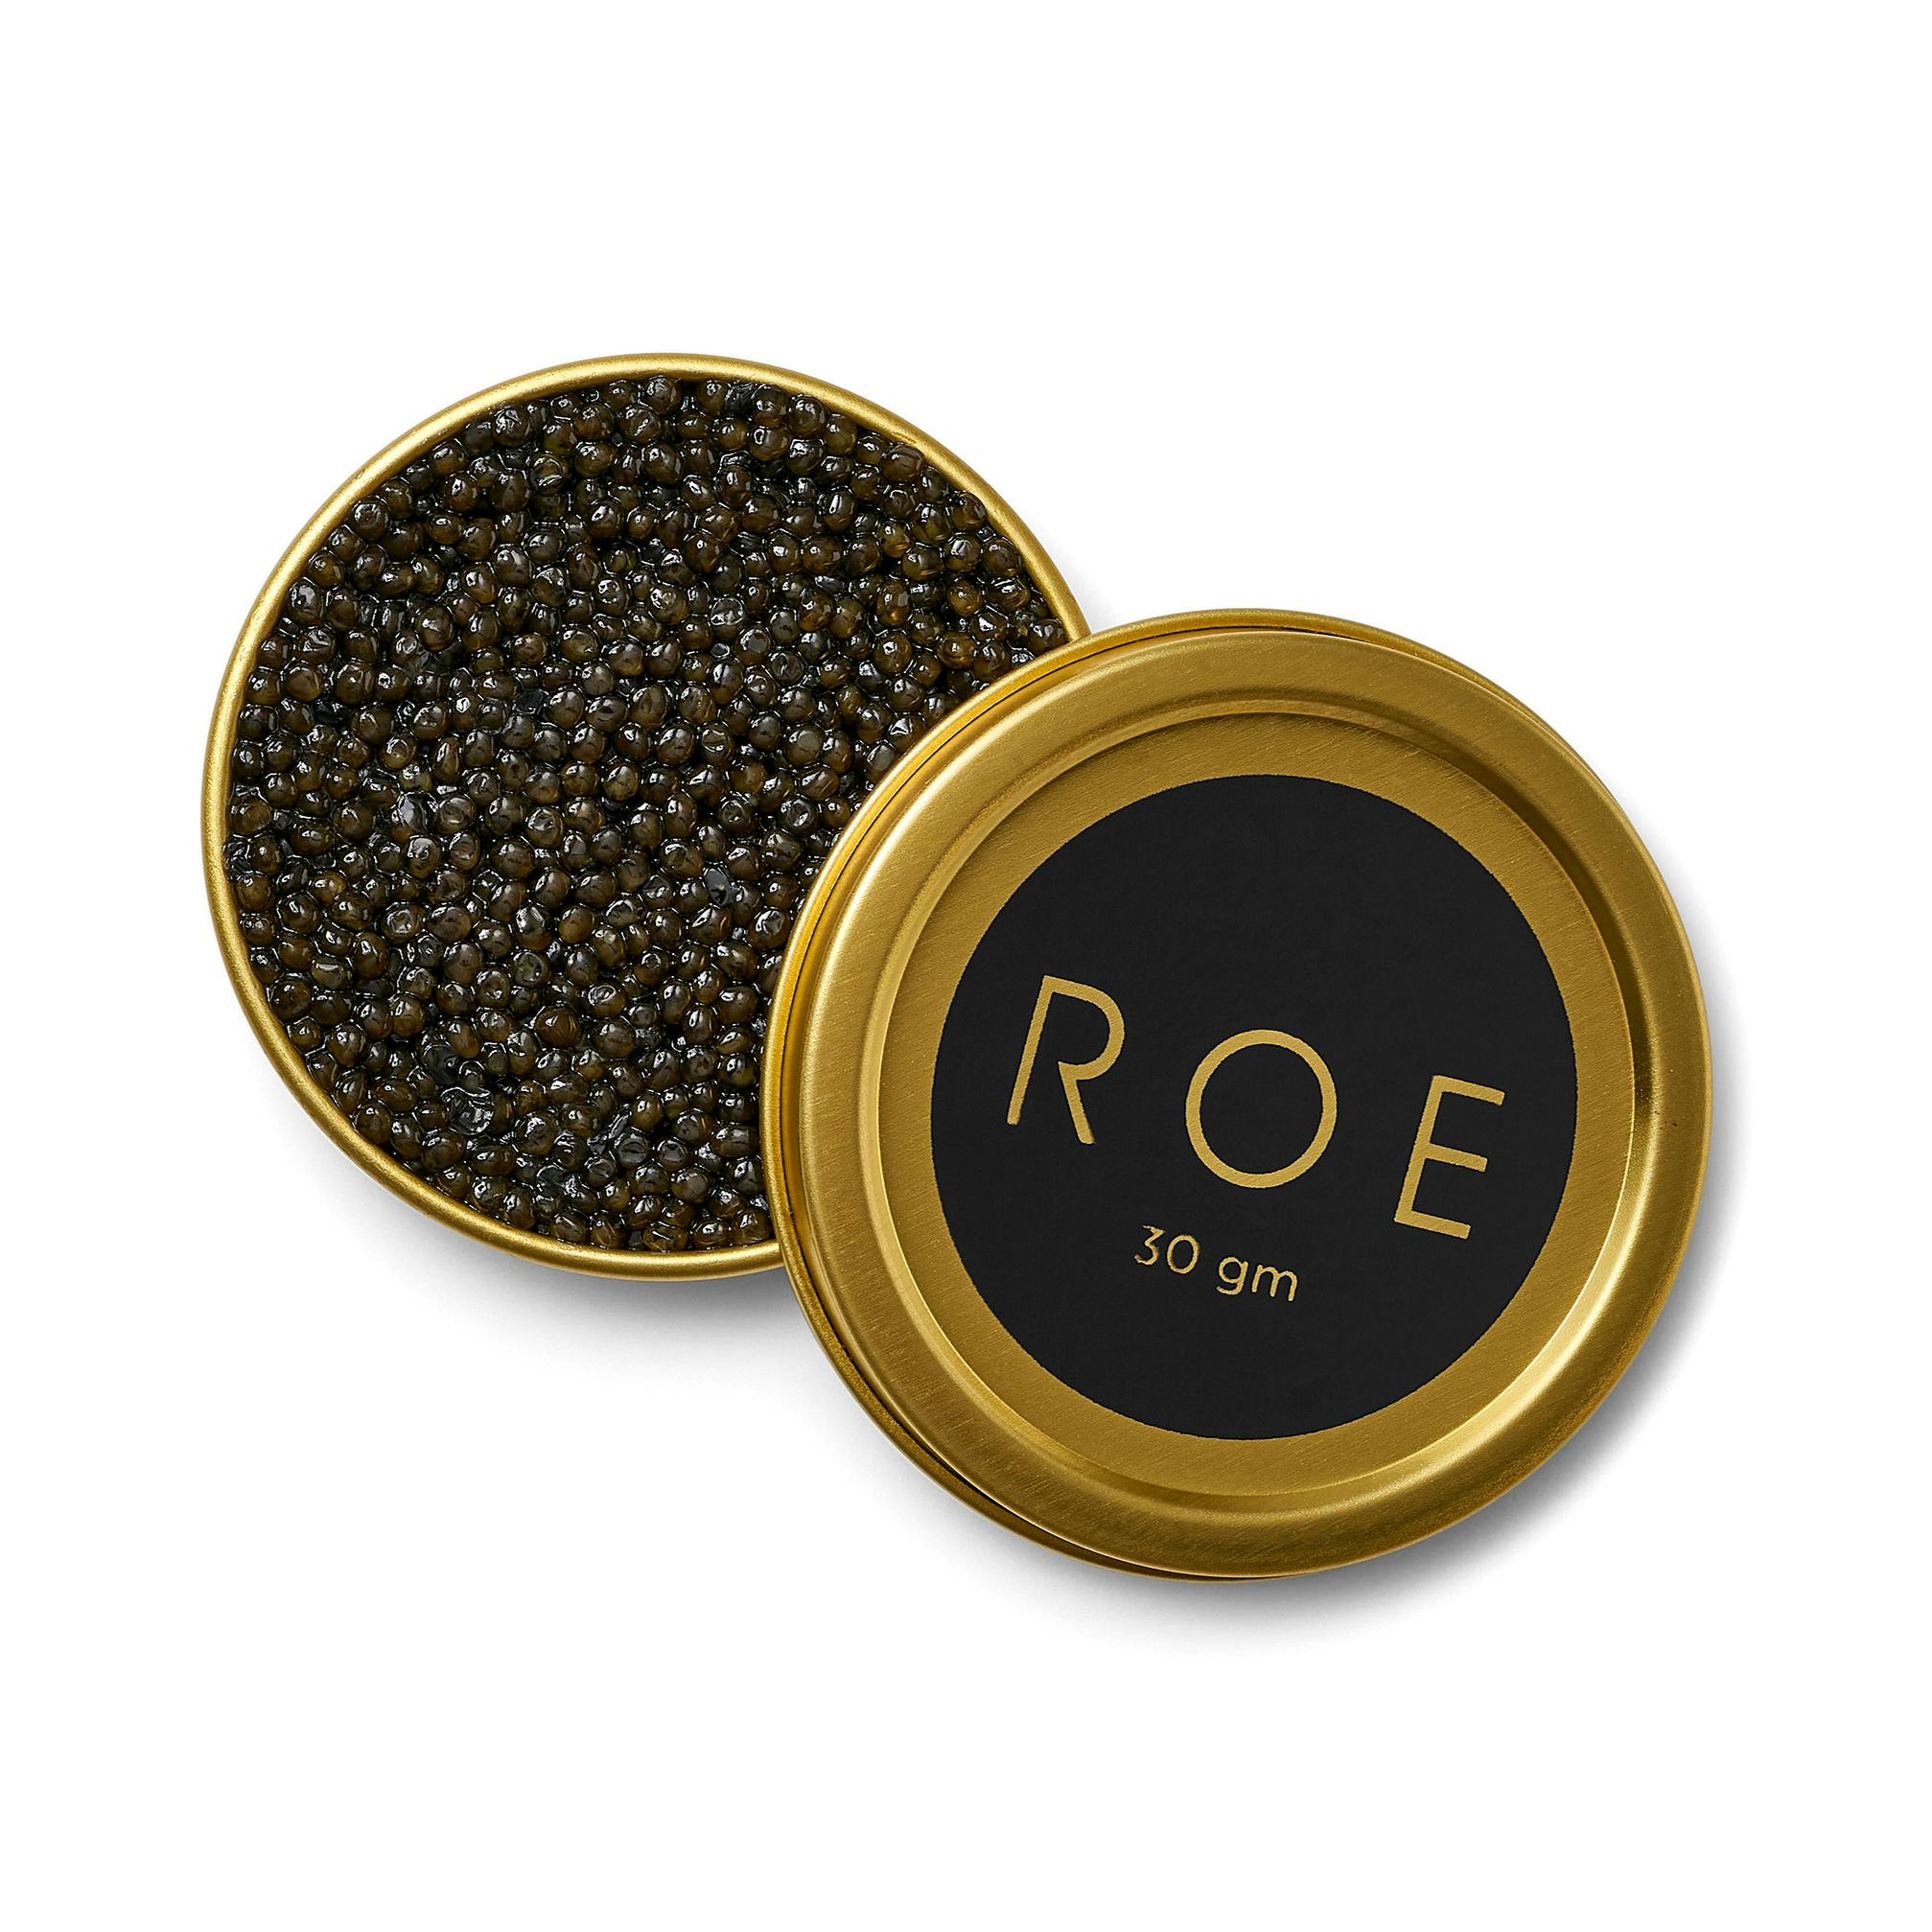 Roe Caviar 30g Gift Set - White Sturgeon Caviar, Kitchen & Coffee